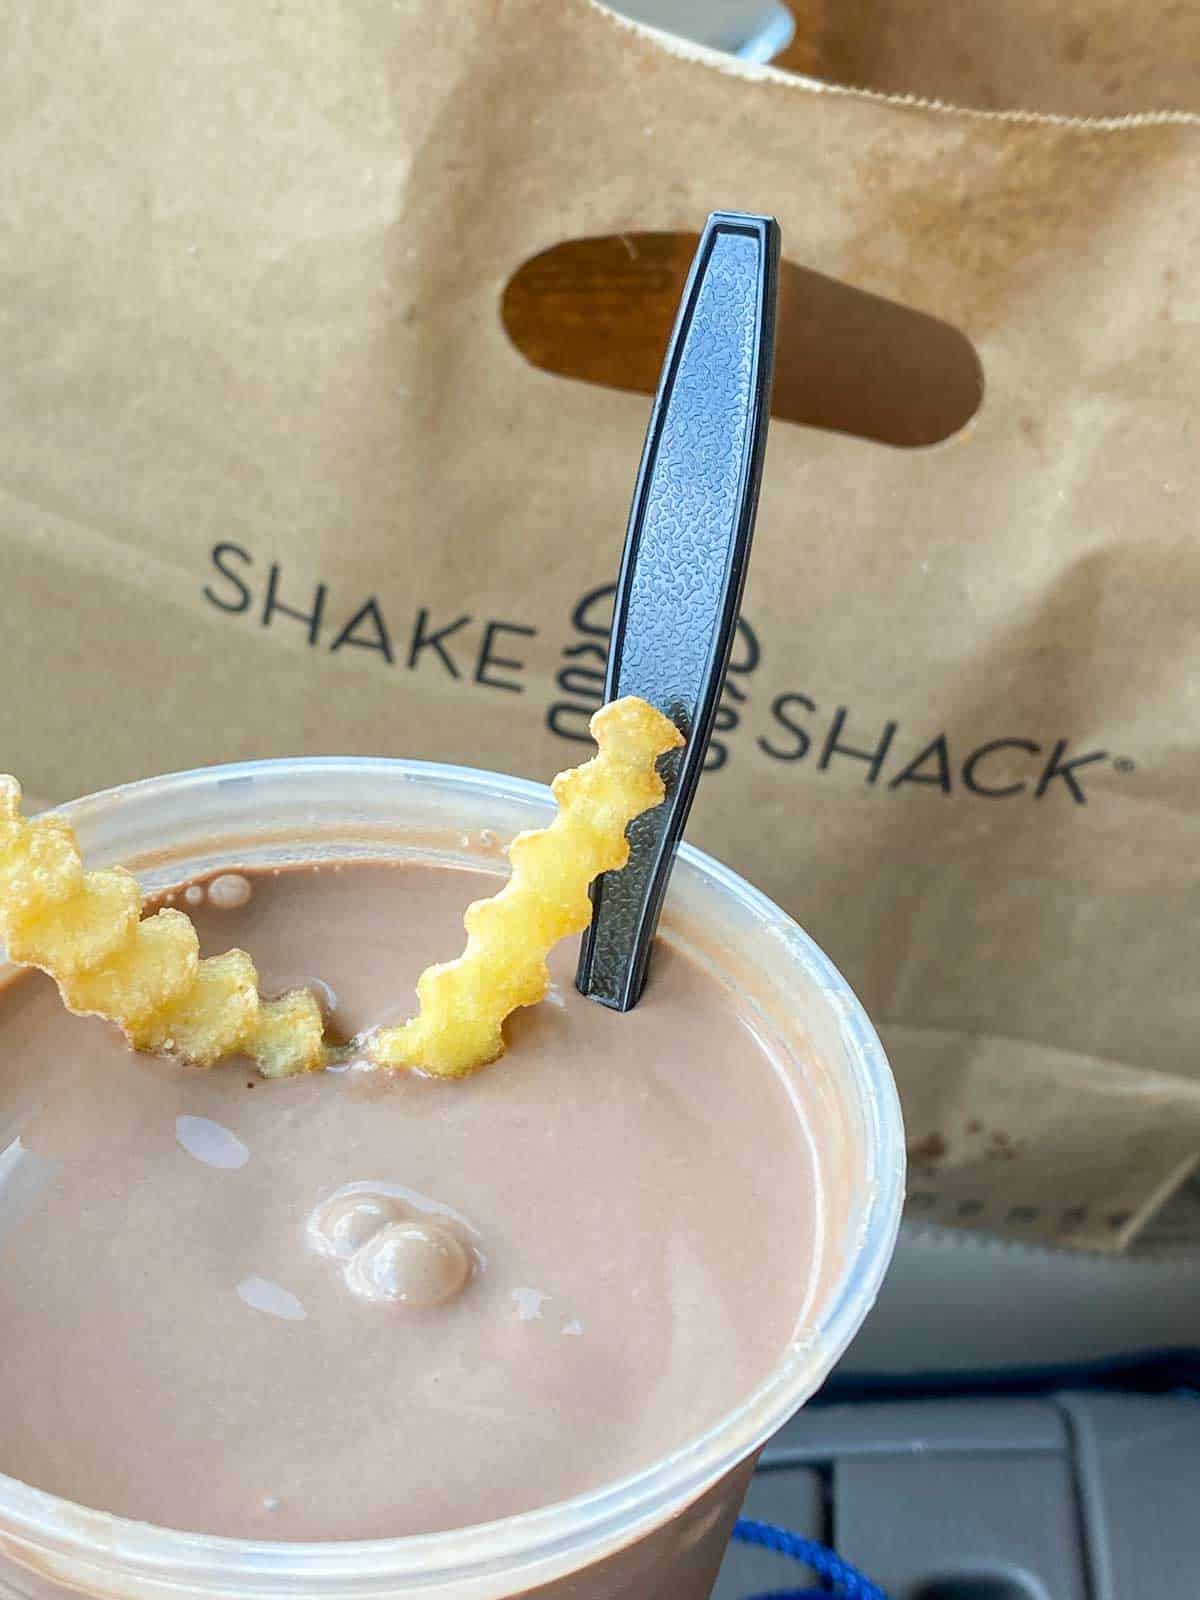 Shake shack chocolate milkshake with fries dipped in